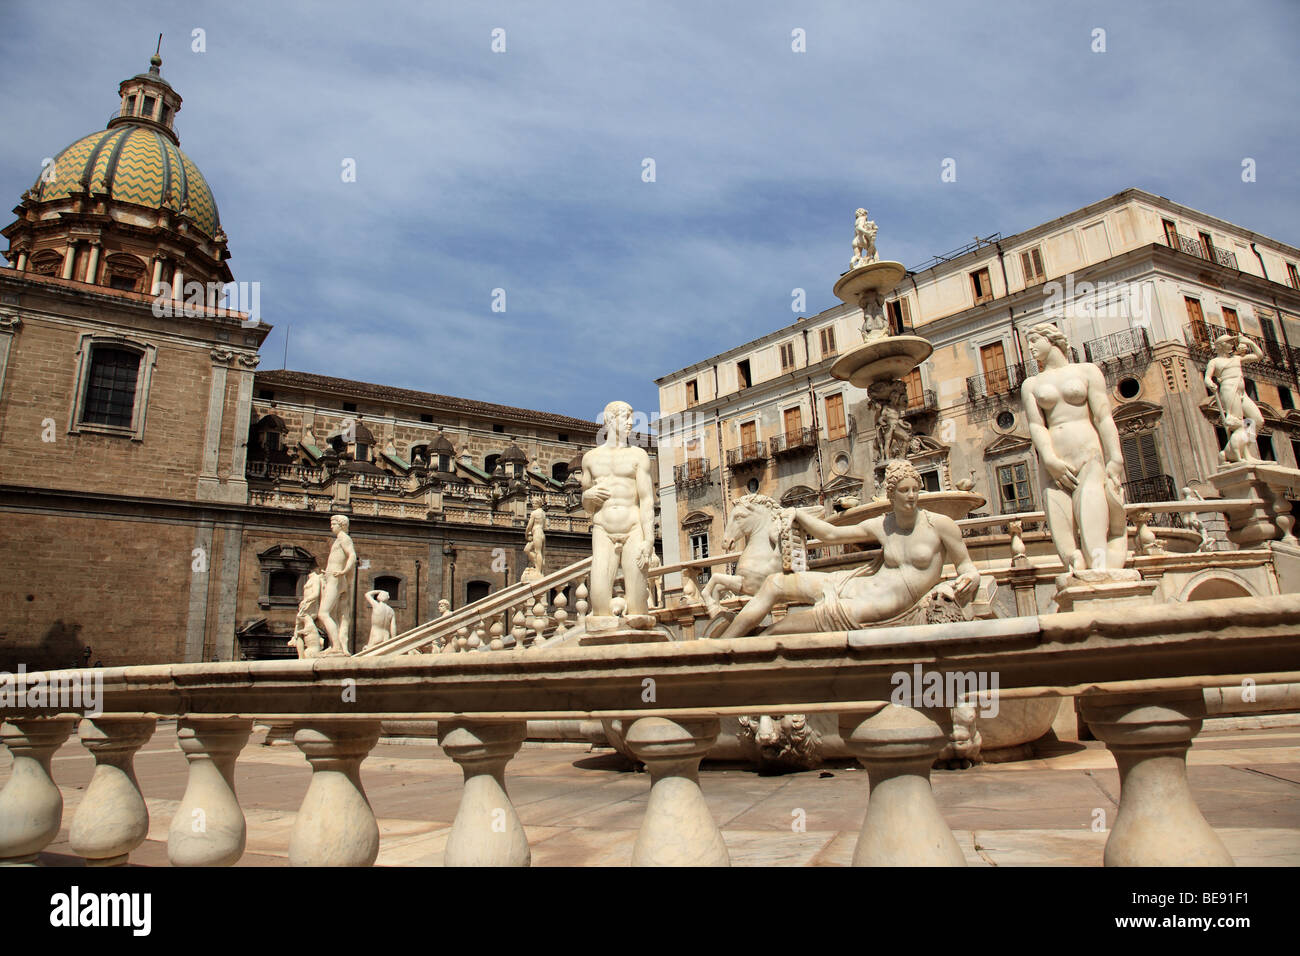 Les figures ornant le Fontana Pretoria dans la Piazza Pretoria de Palerme Sicile Italie Banque D'Images